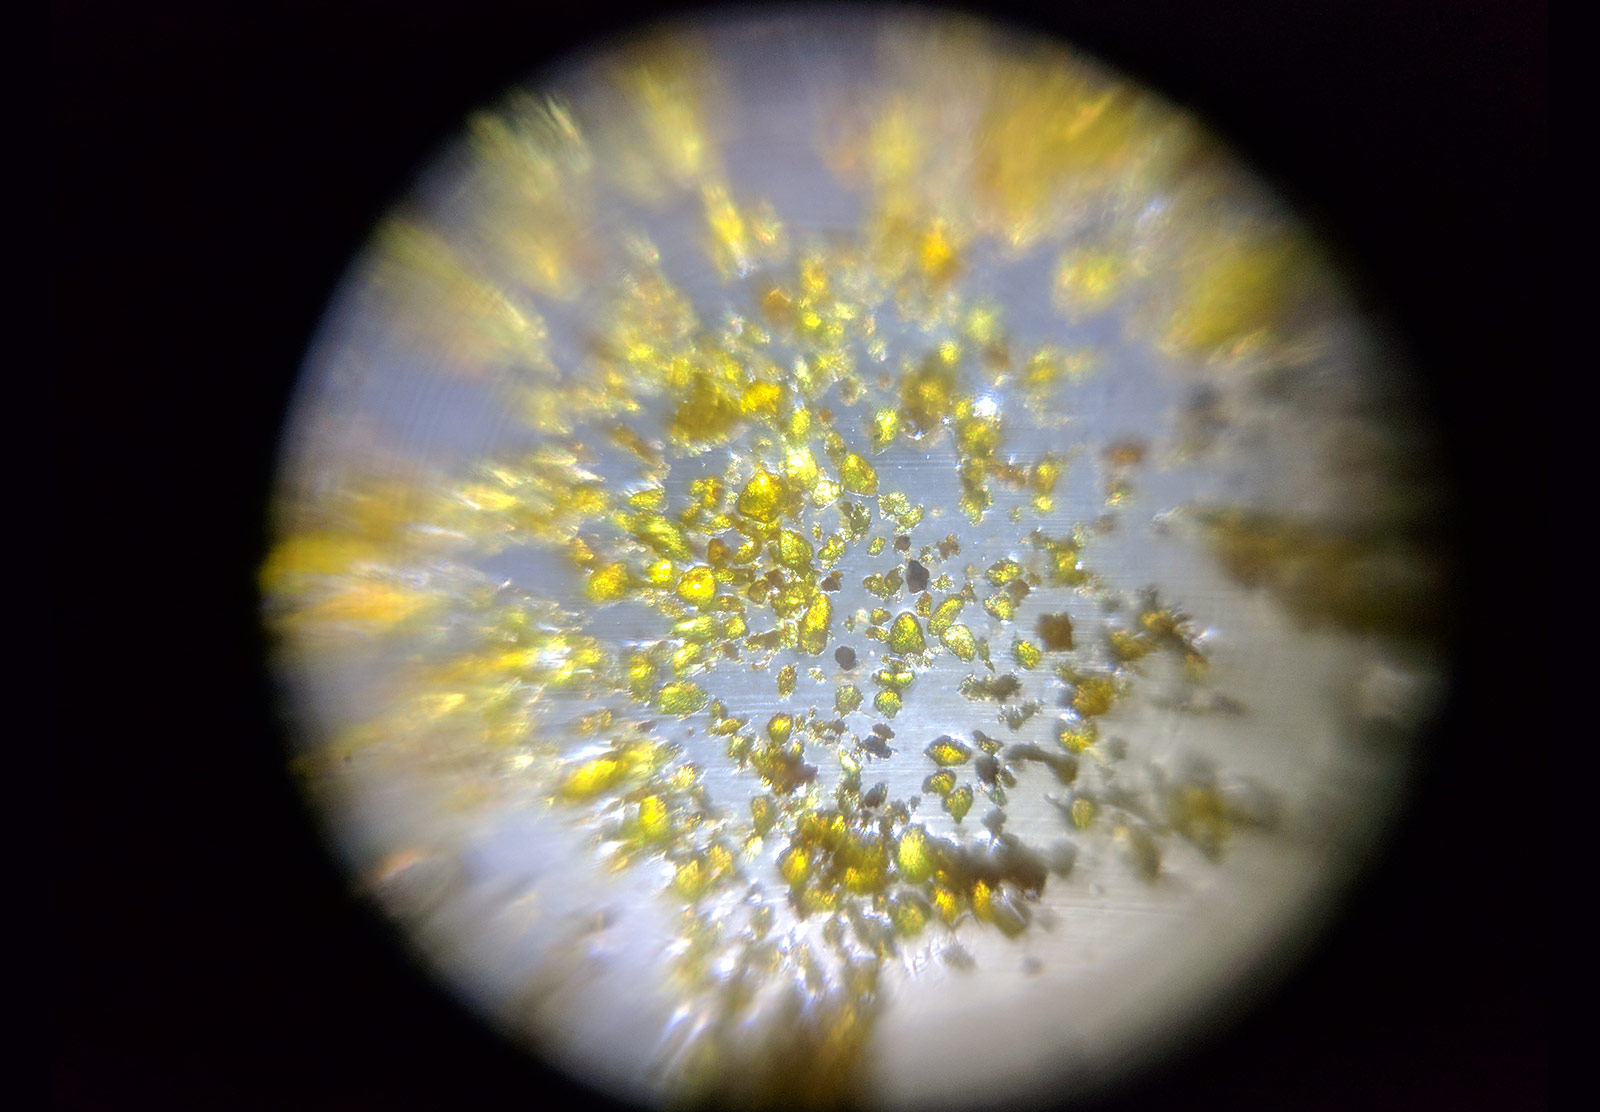 Turmeric powder under microscope